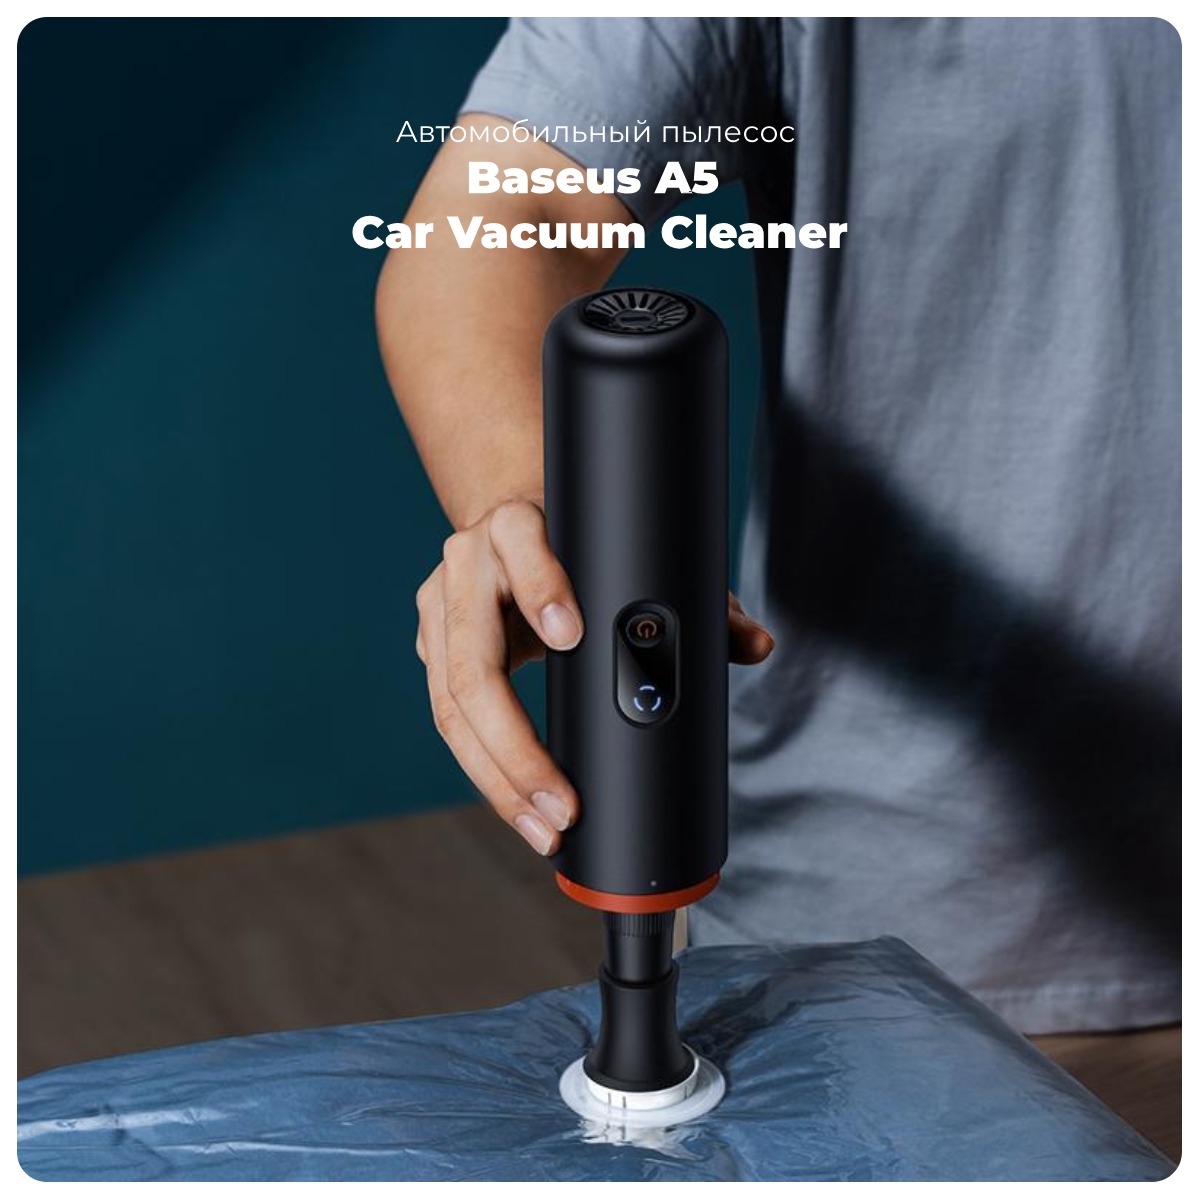 Baseus-A5-Car-Vacuum-Cleaner-01